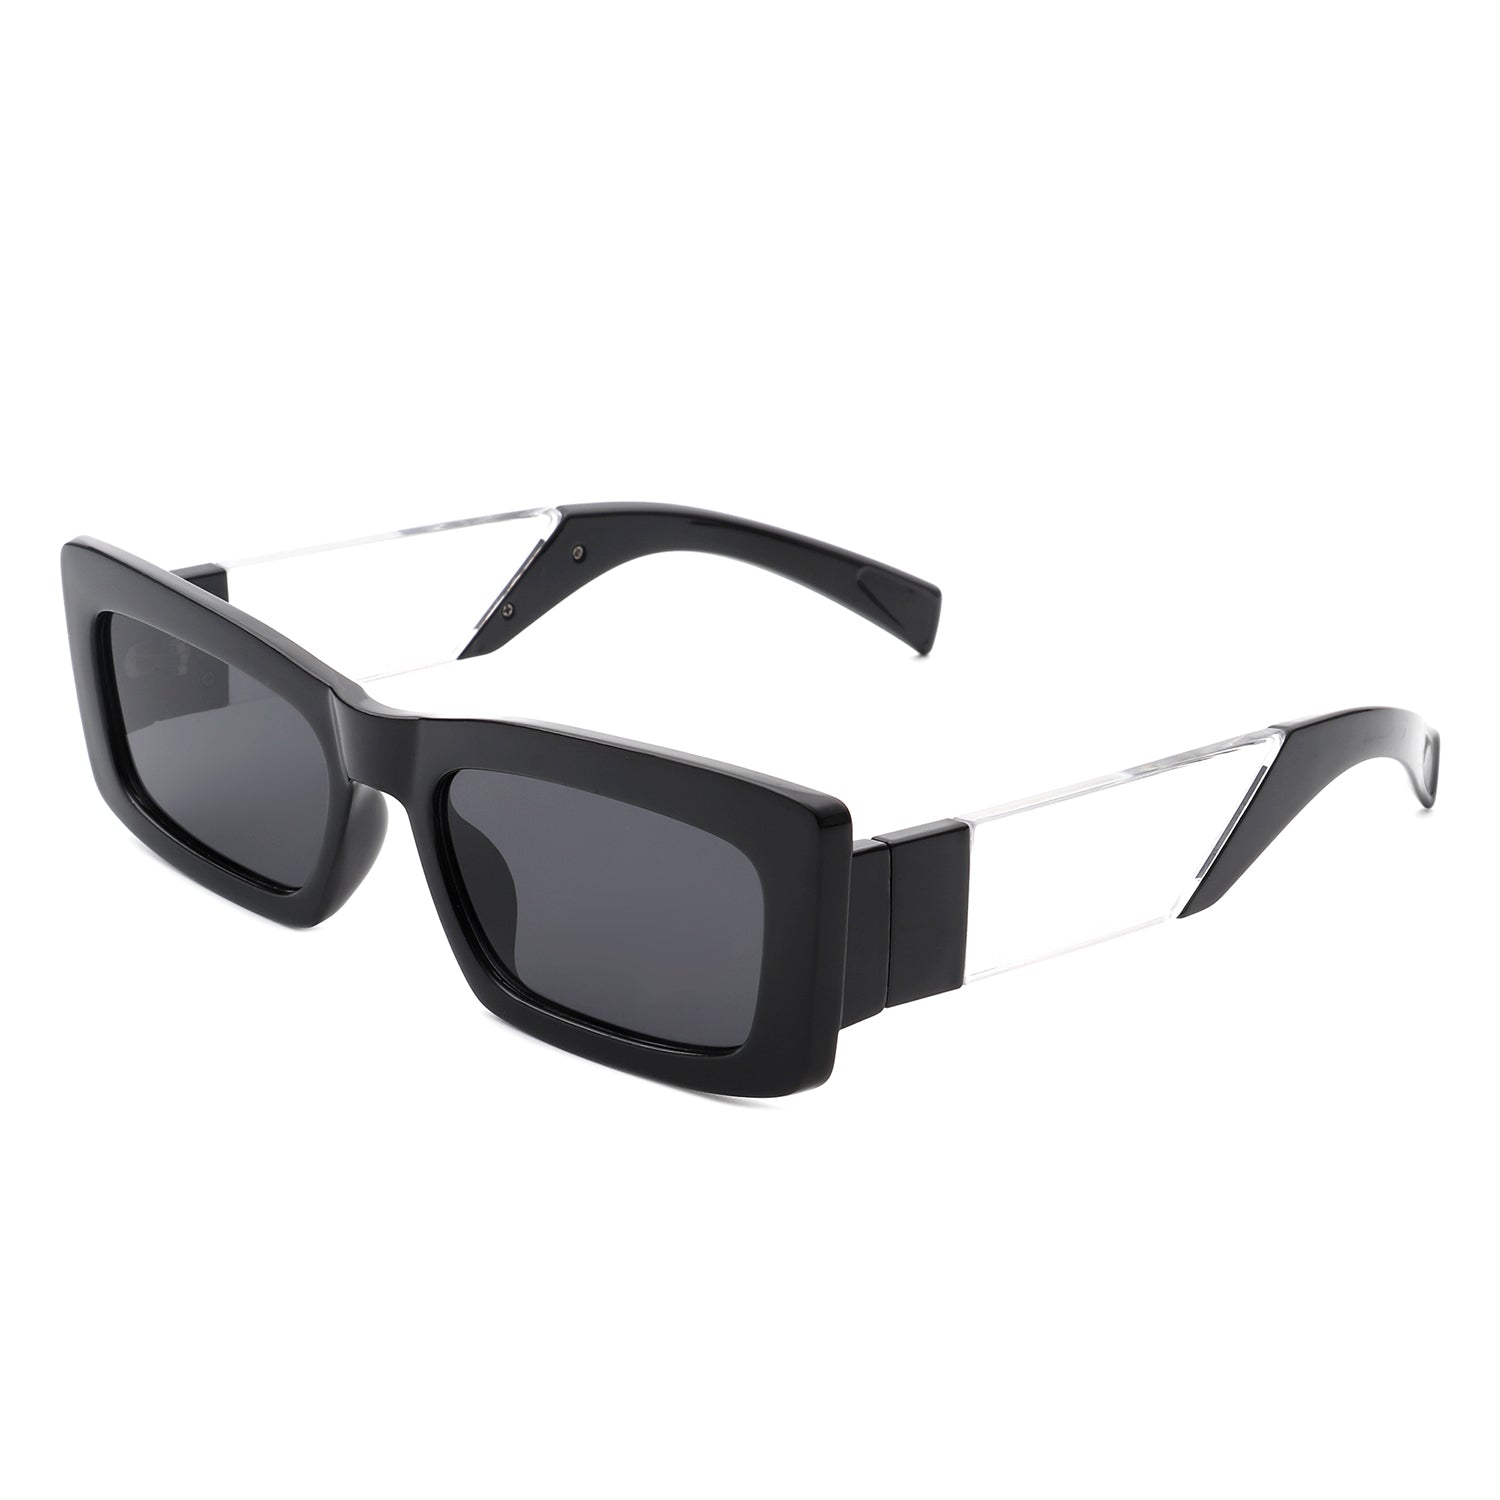 Discover 139+ vintage rectangle sunglasses best